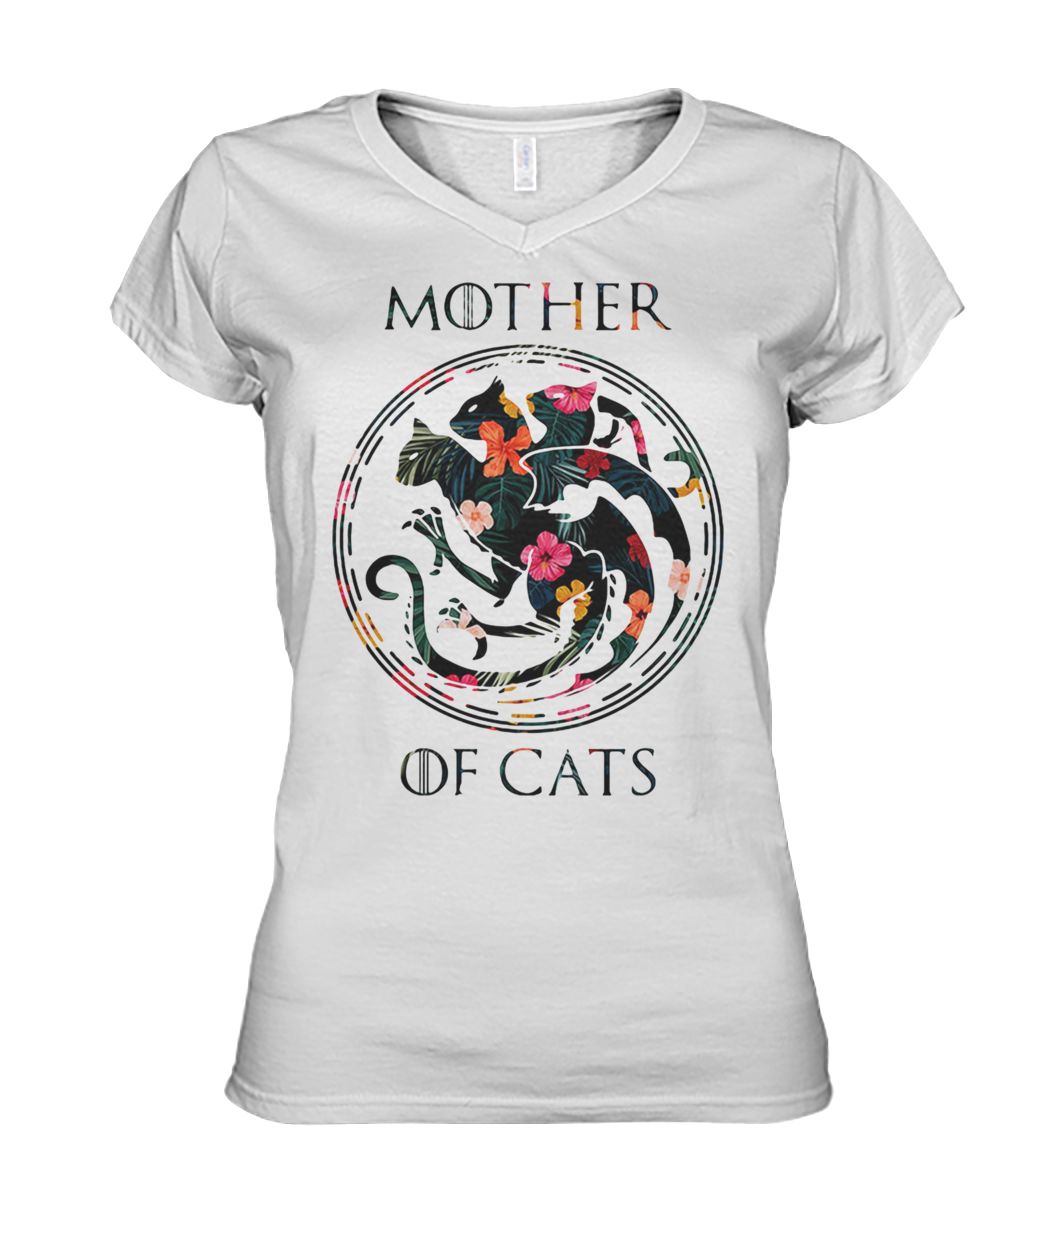 Game of thrones mother of cats flower women's v-neck